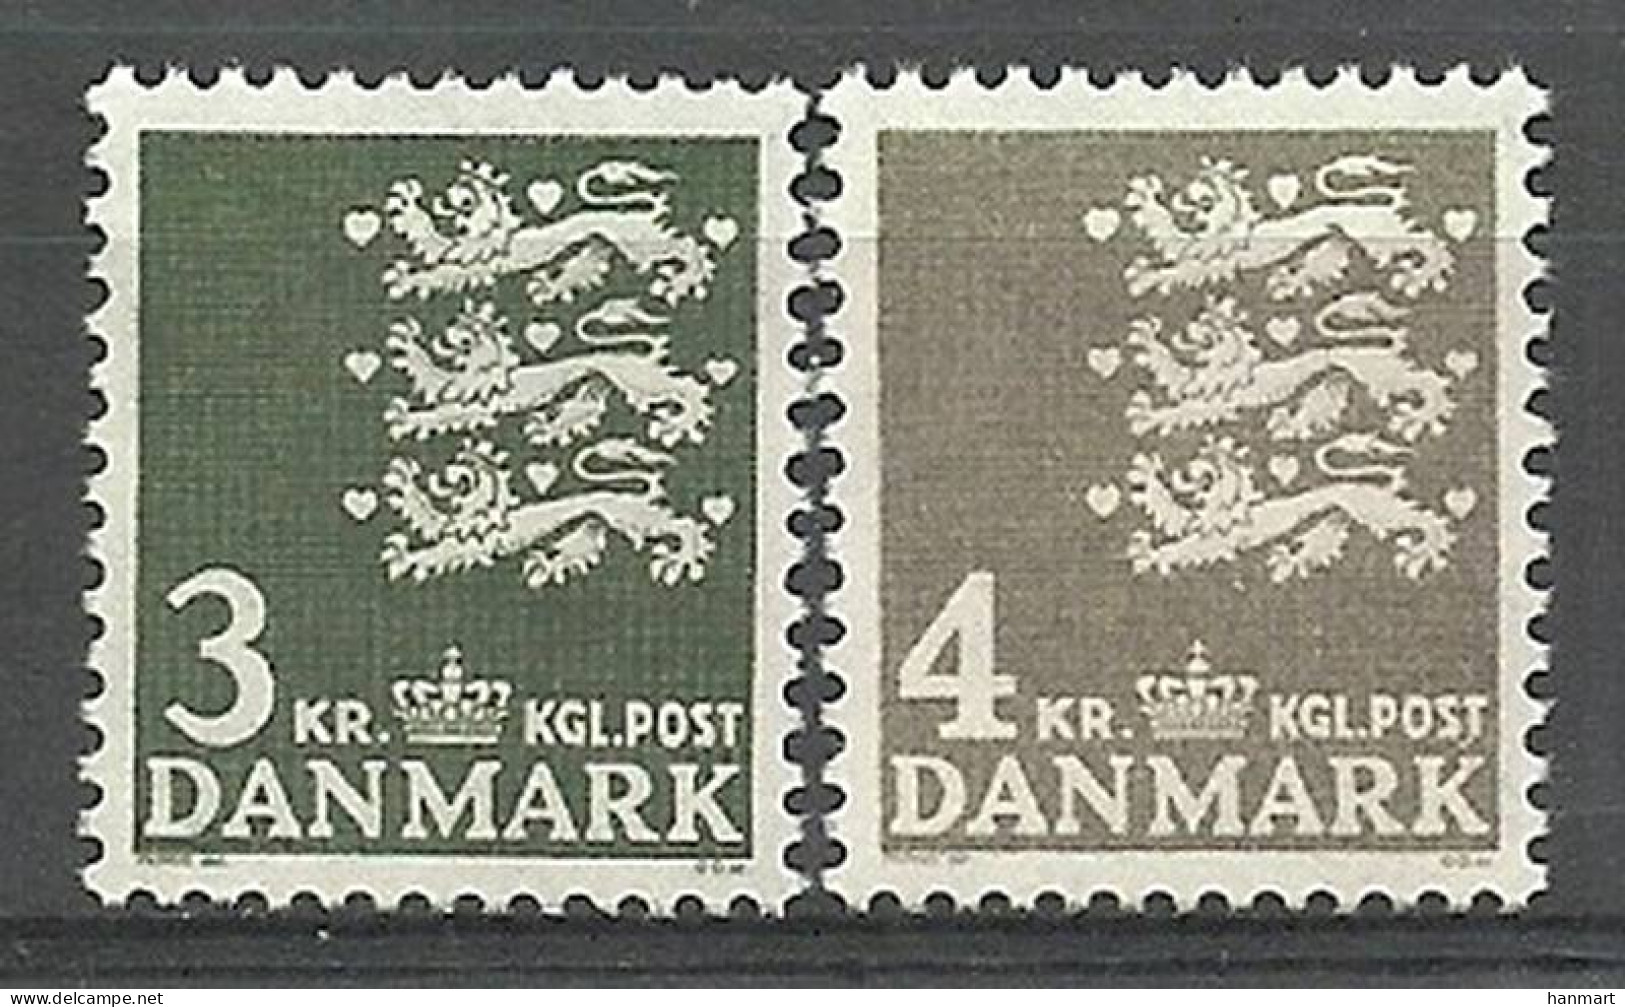 Denmark 1969 Mi 483-484 MNH  (ZE3 DNM483-484) - Stamps